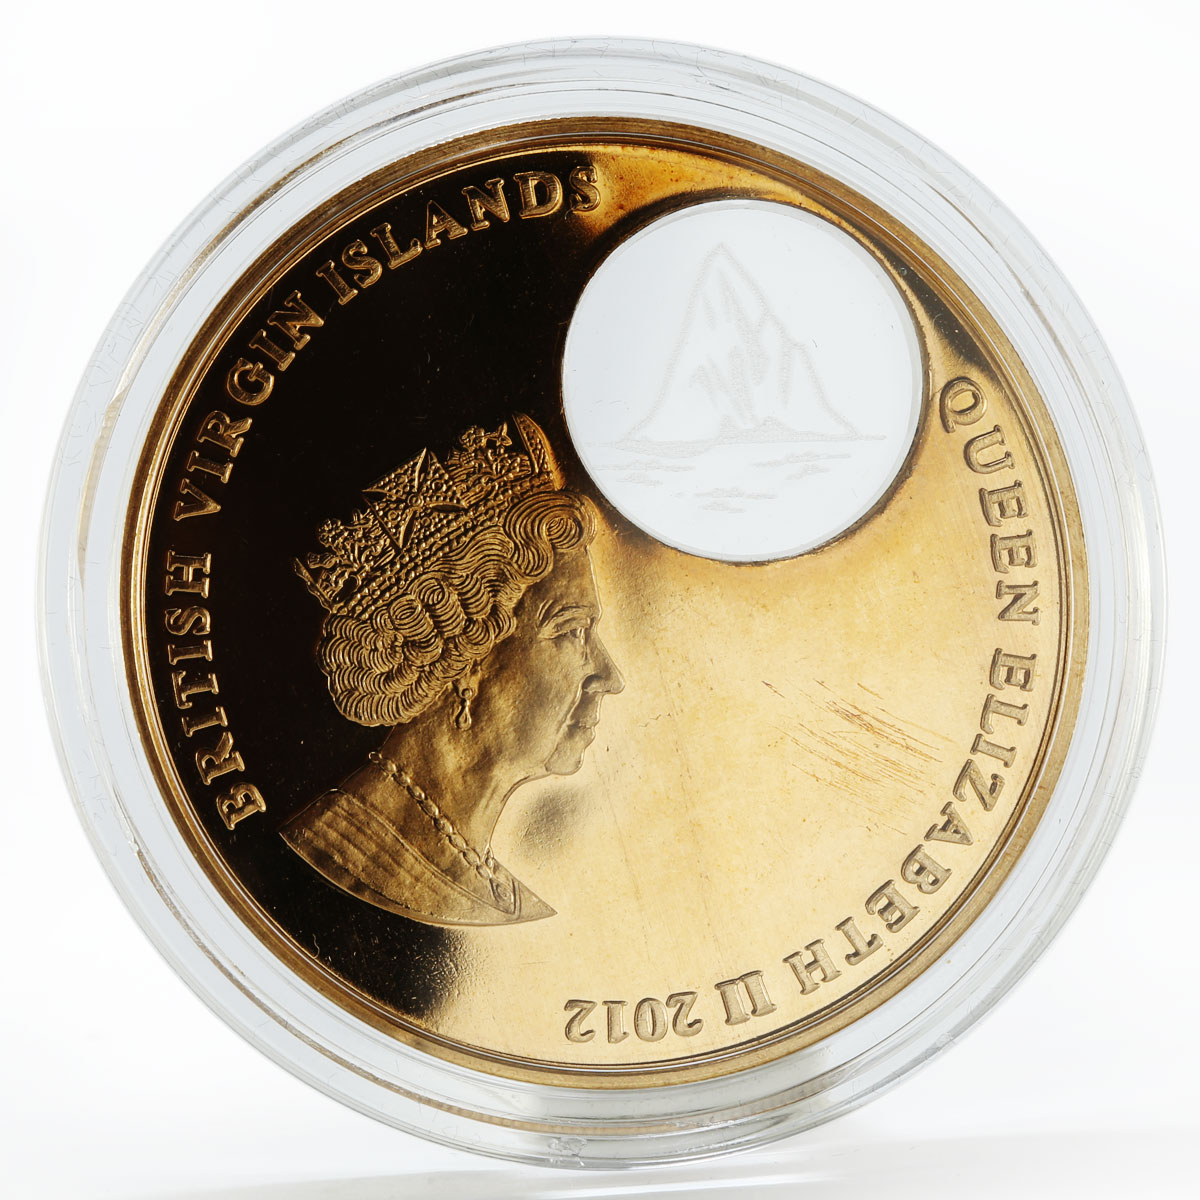 British Virgin Islands 2$ R.M.S. Titanic III proof colored bronze coin 2012